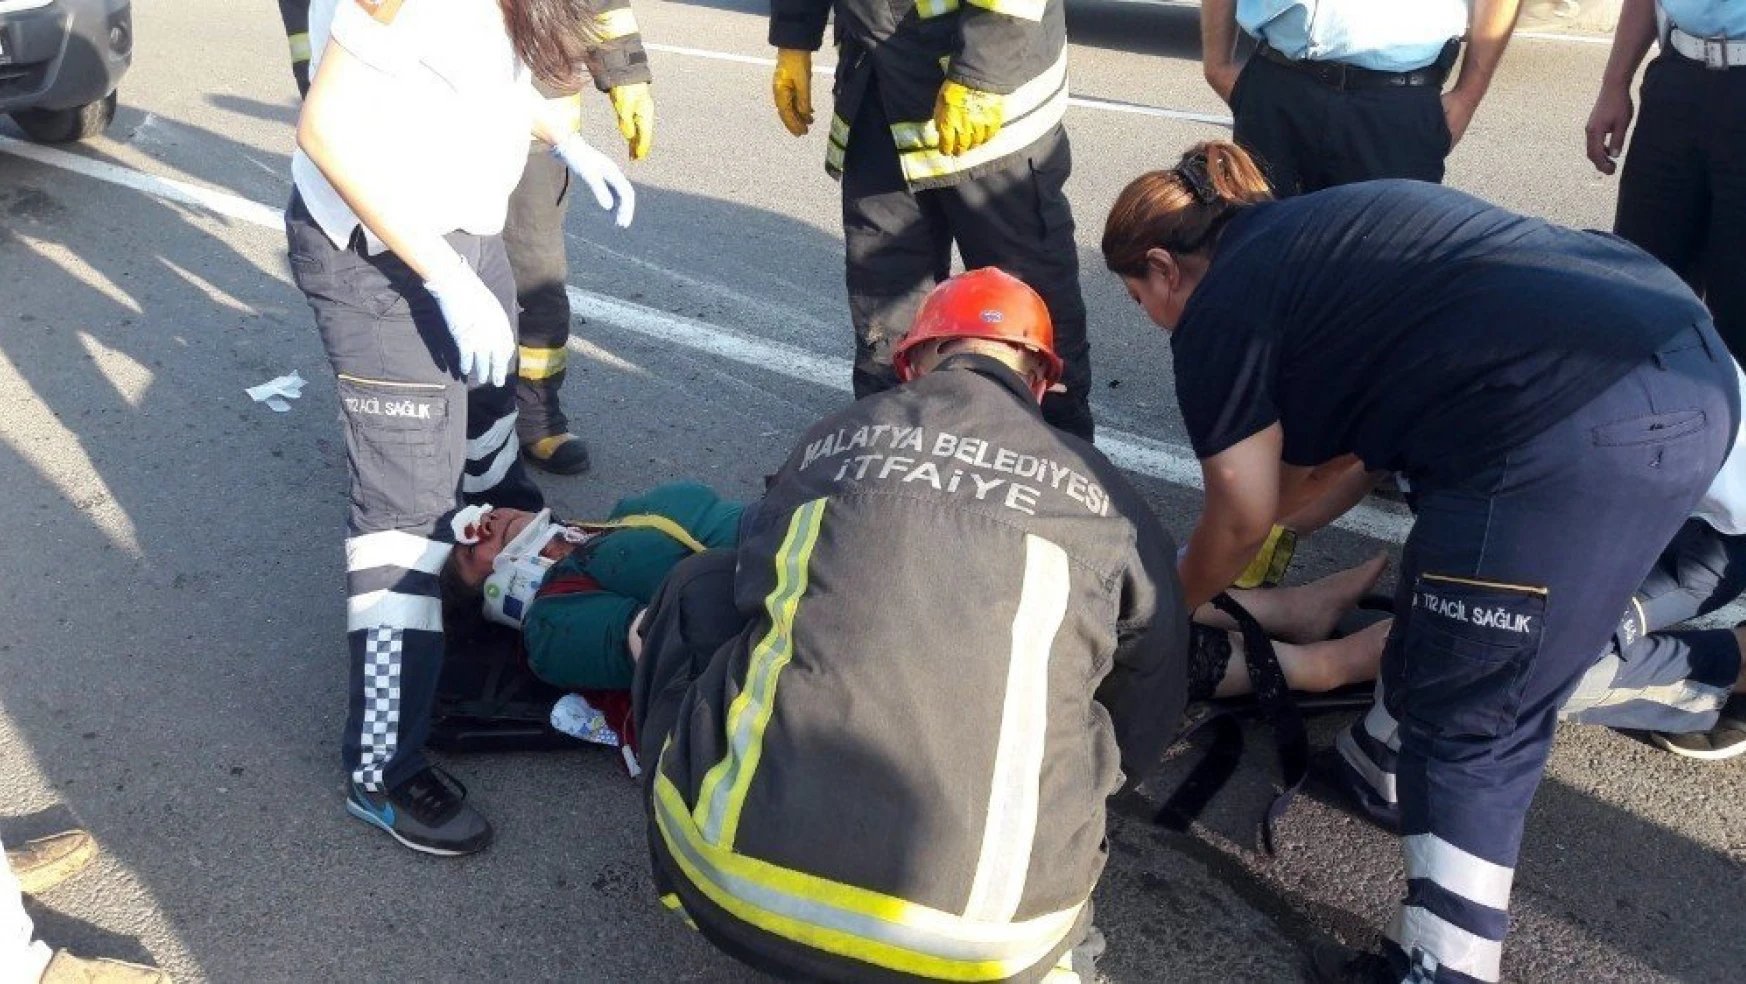 Malatya-Elazığ karayolunda kaza: 6 yaralı
